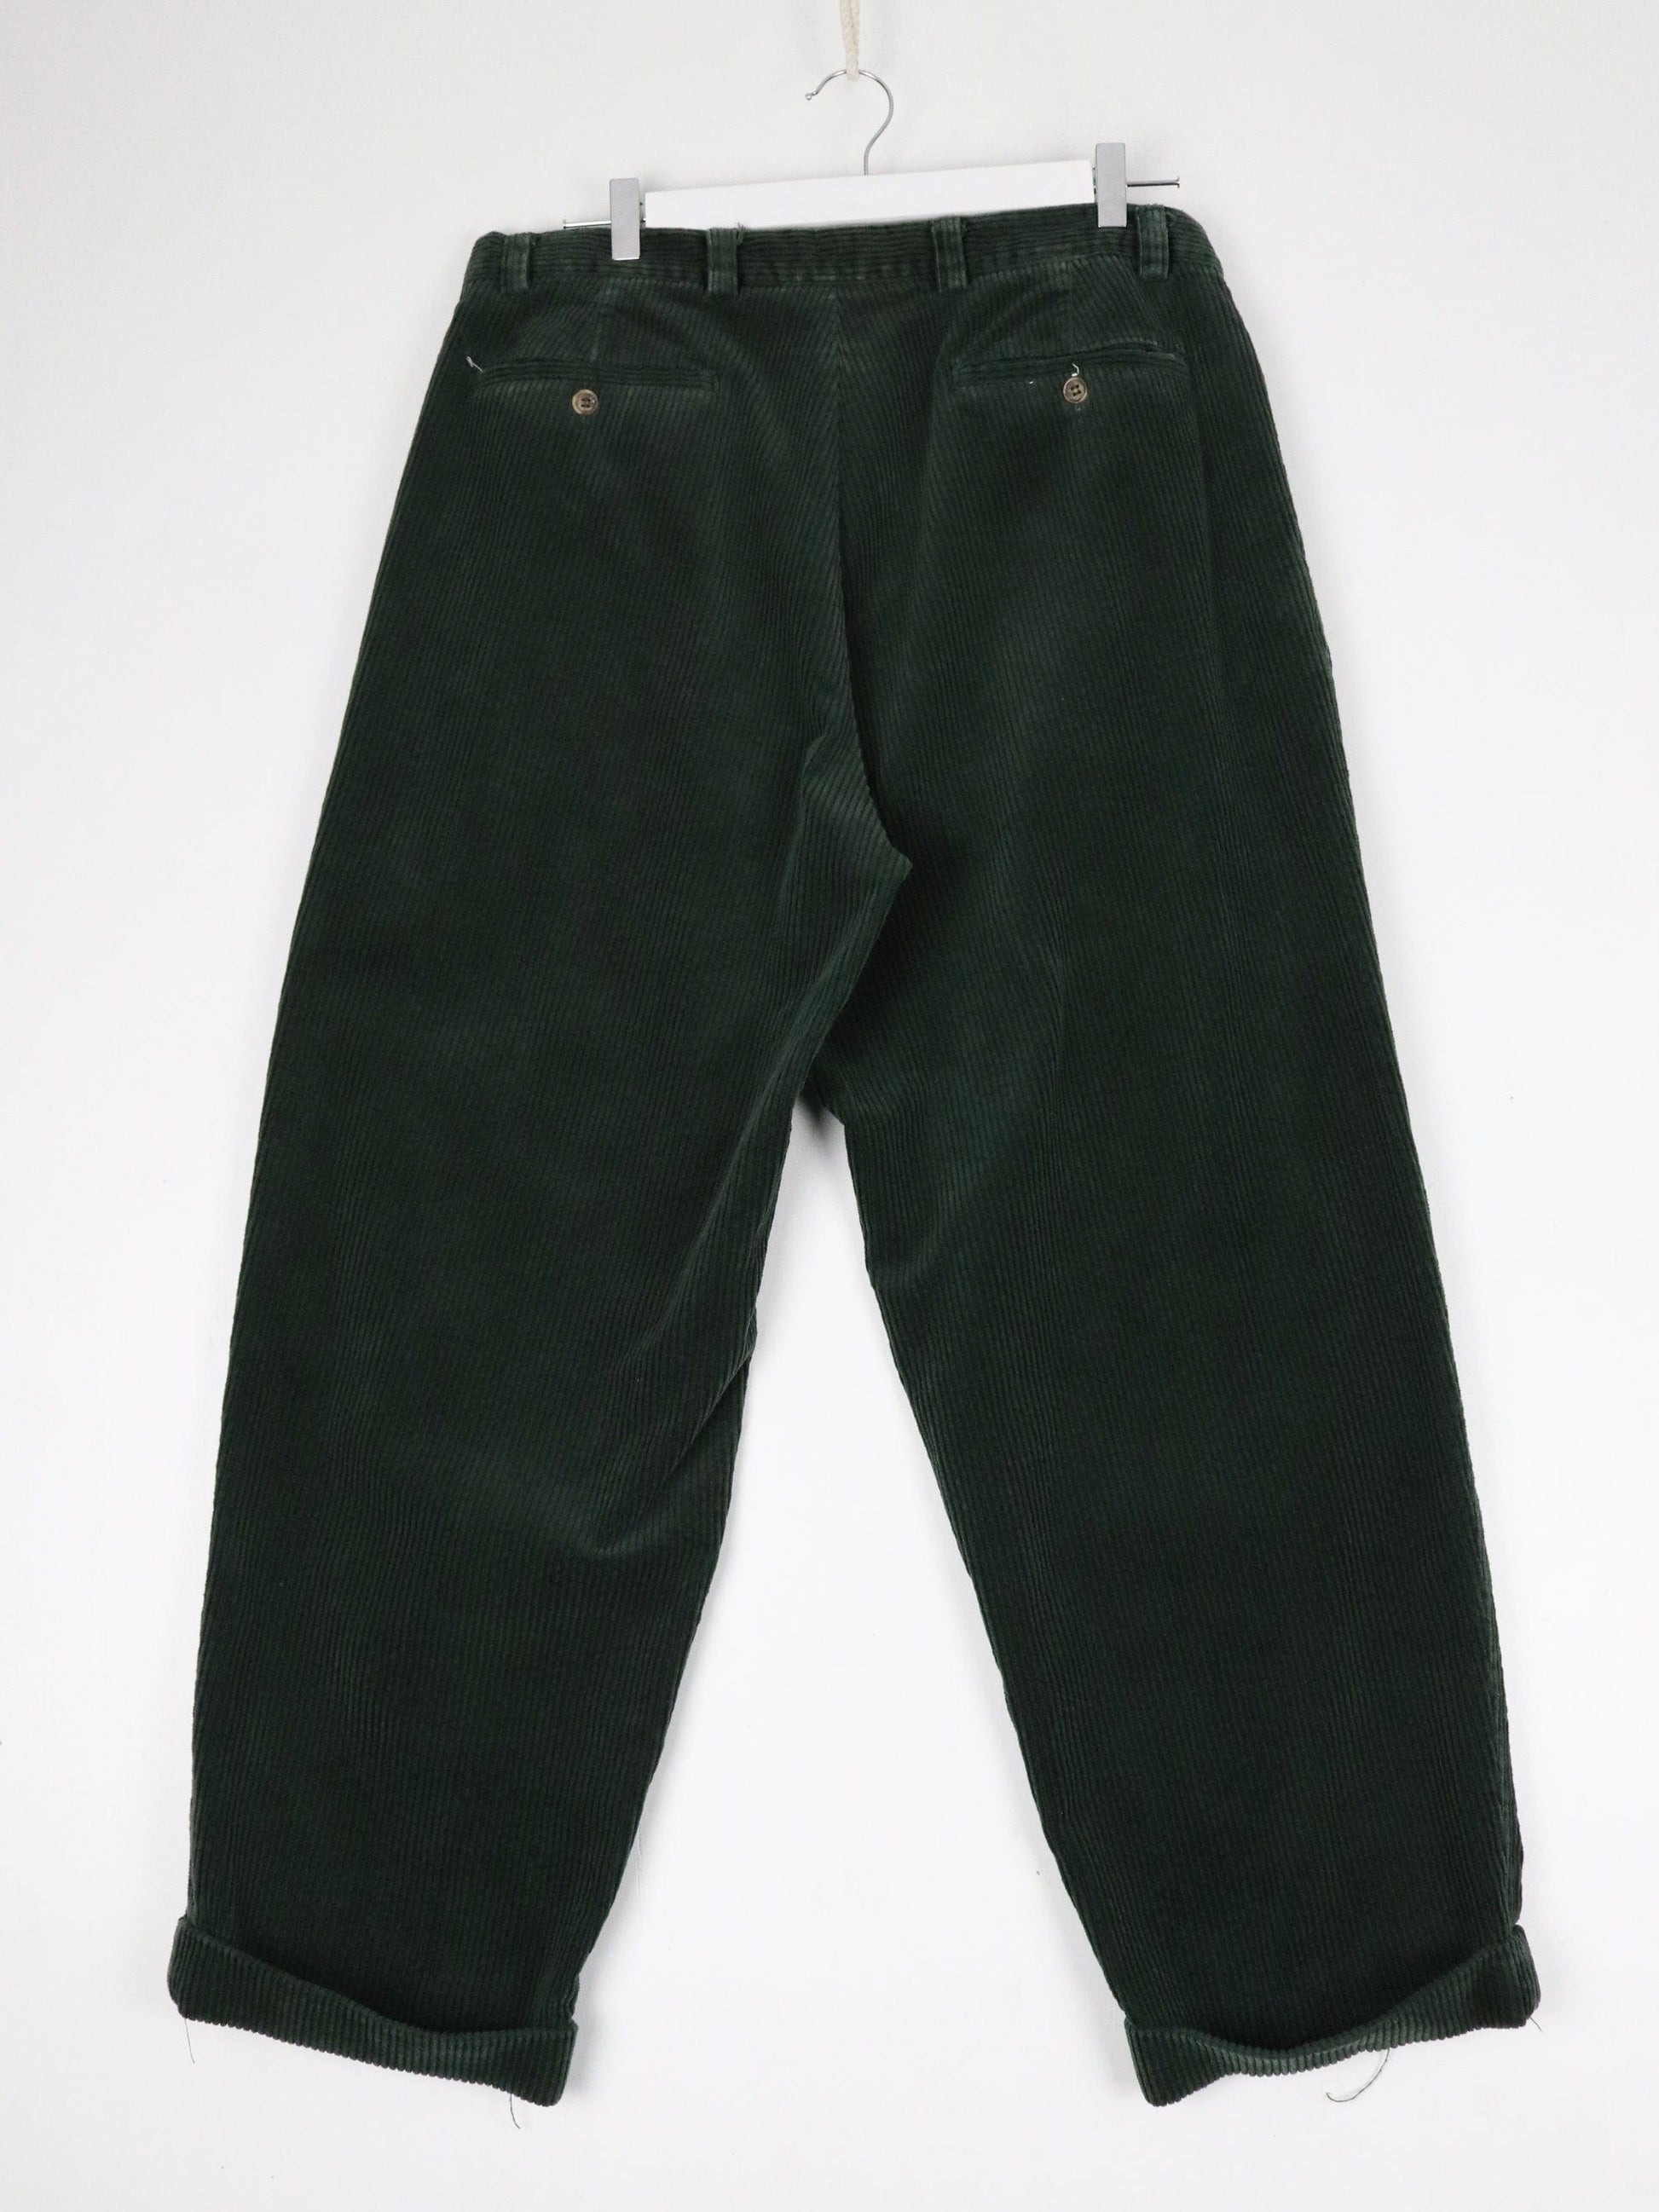 Gap Pants Vintage Gap Pants Mens 34 x 26 Green Corduroy Trousers